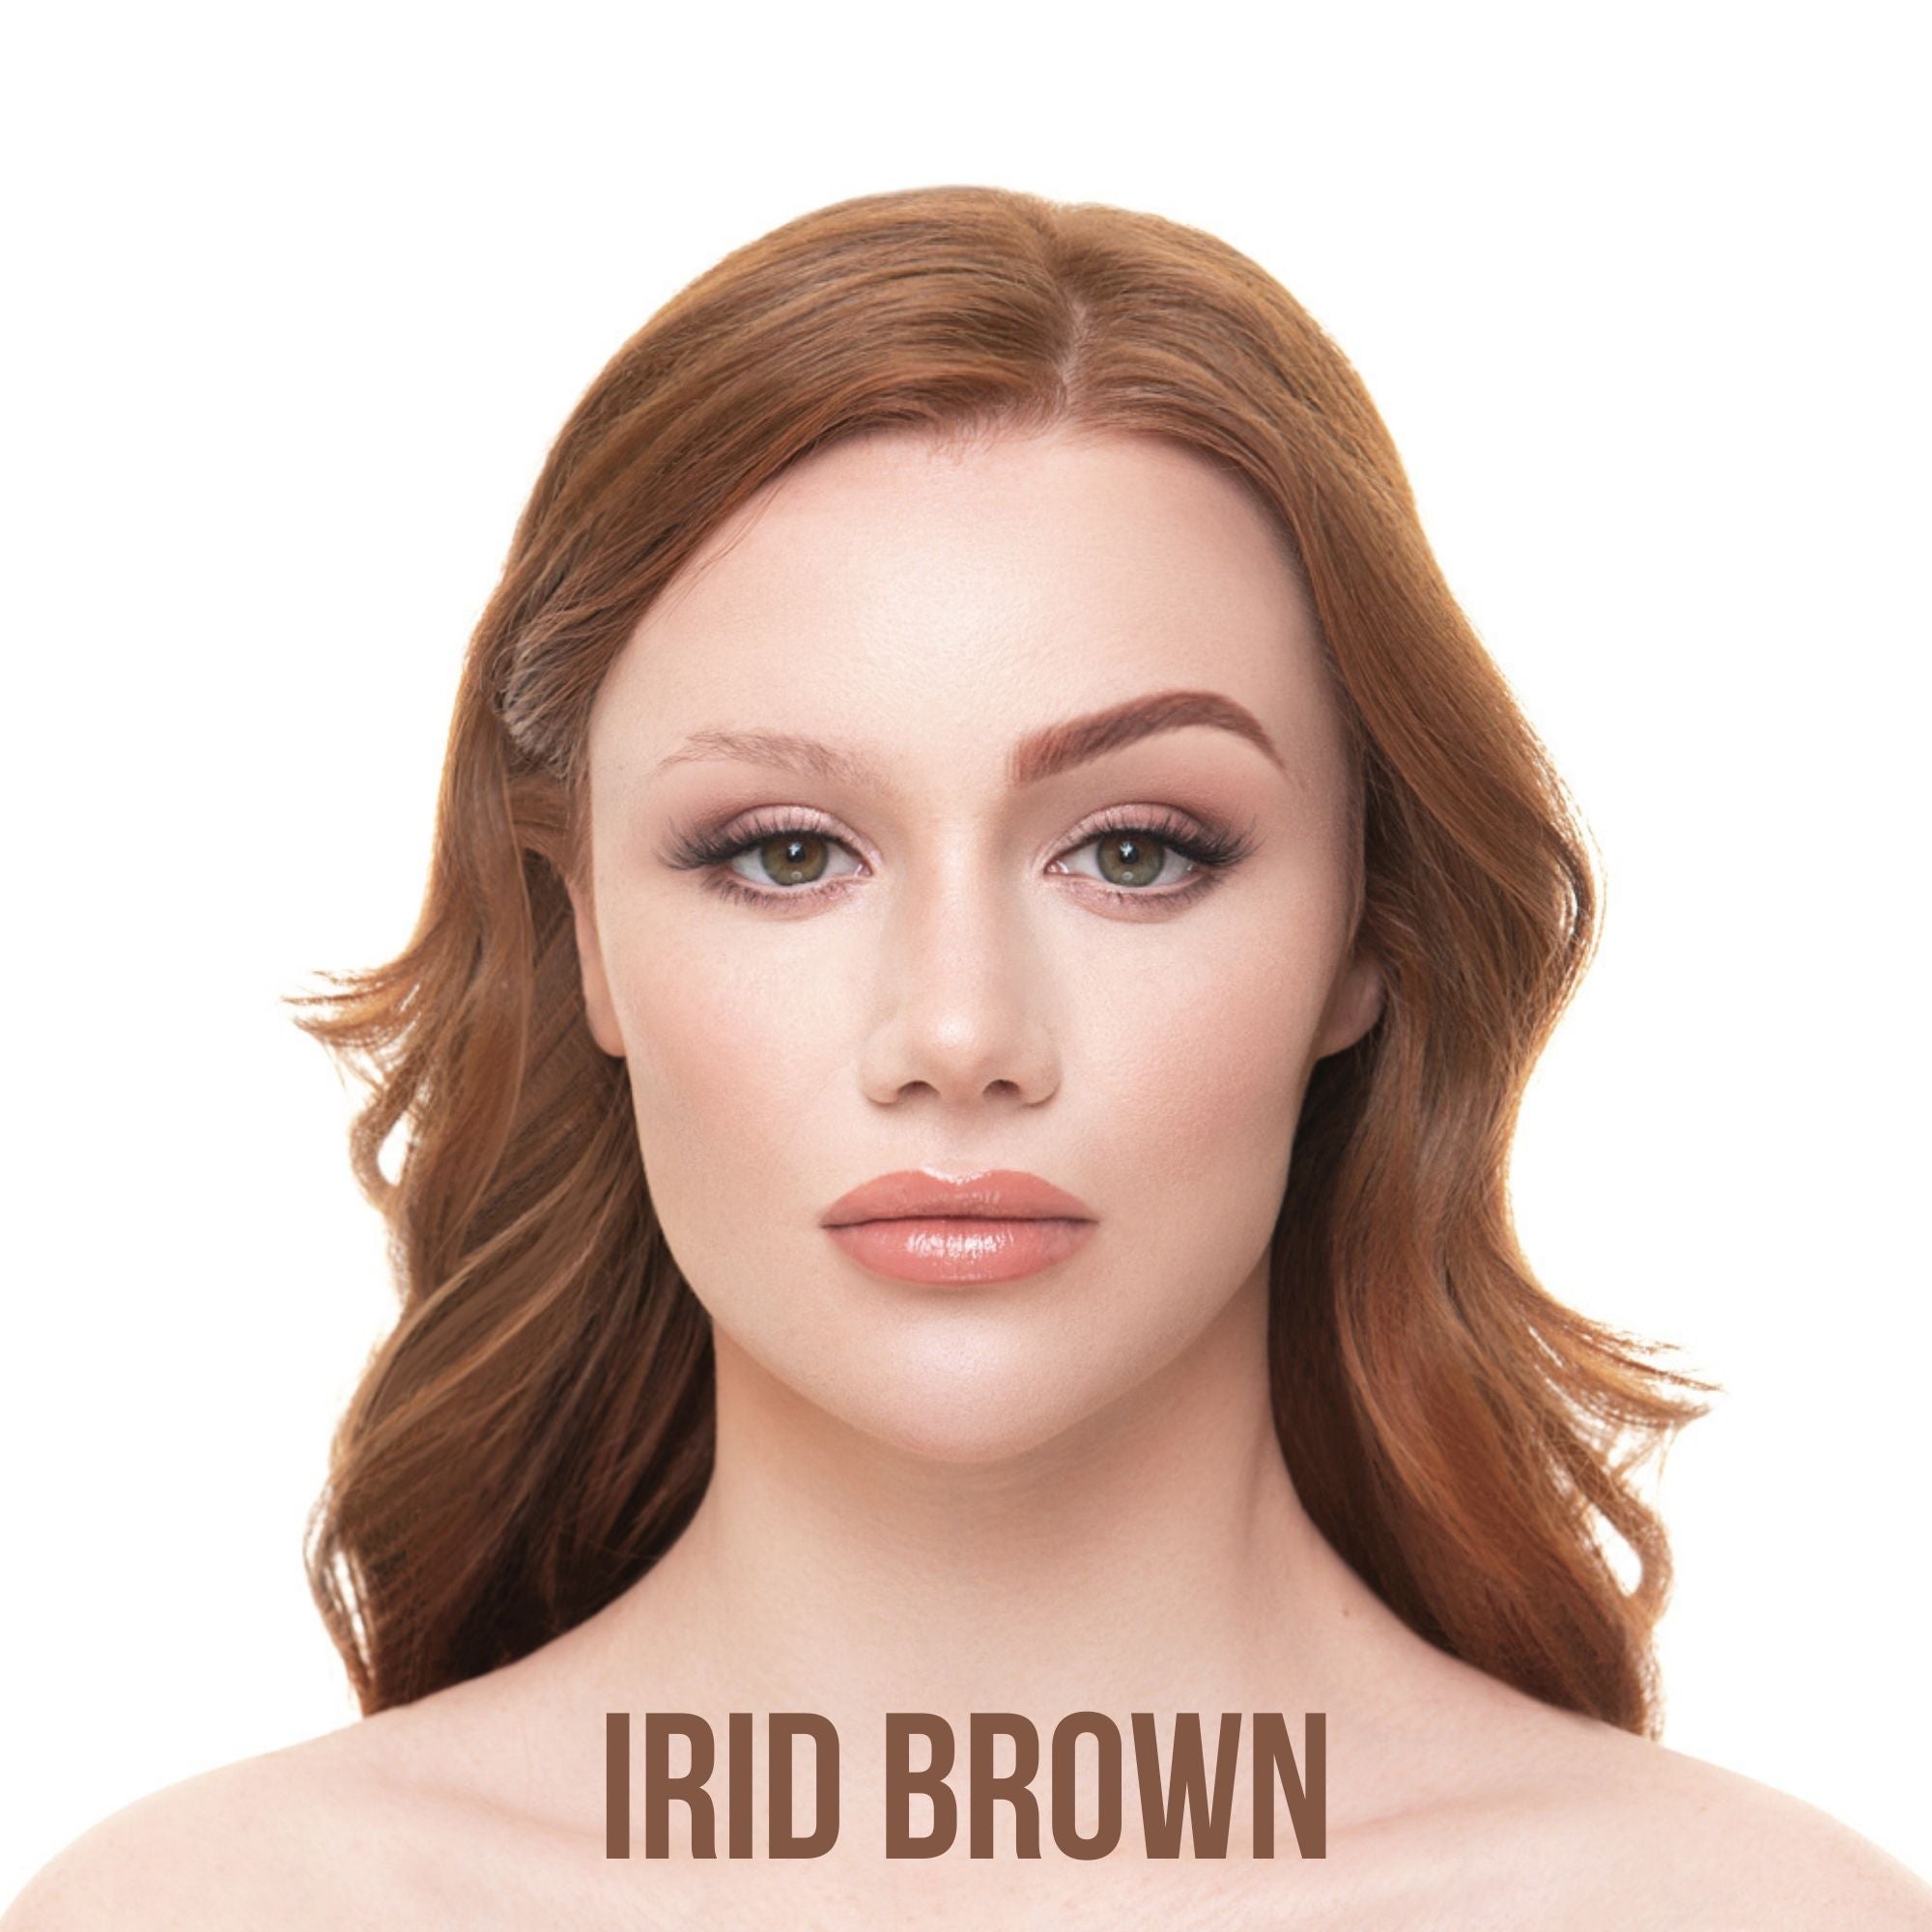 bPerfect Cosmetics - Indestructi'Brow Lock and Load Eye Brow Set - Irid Brown